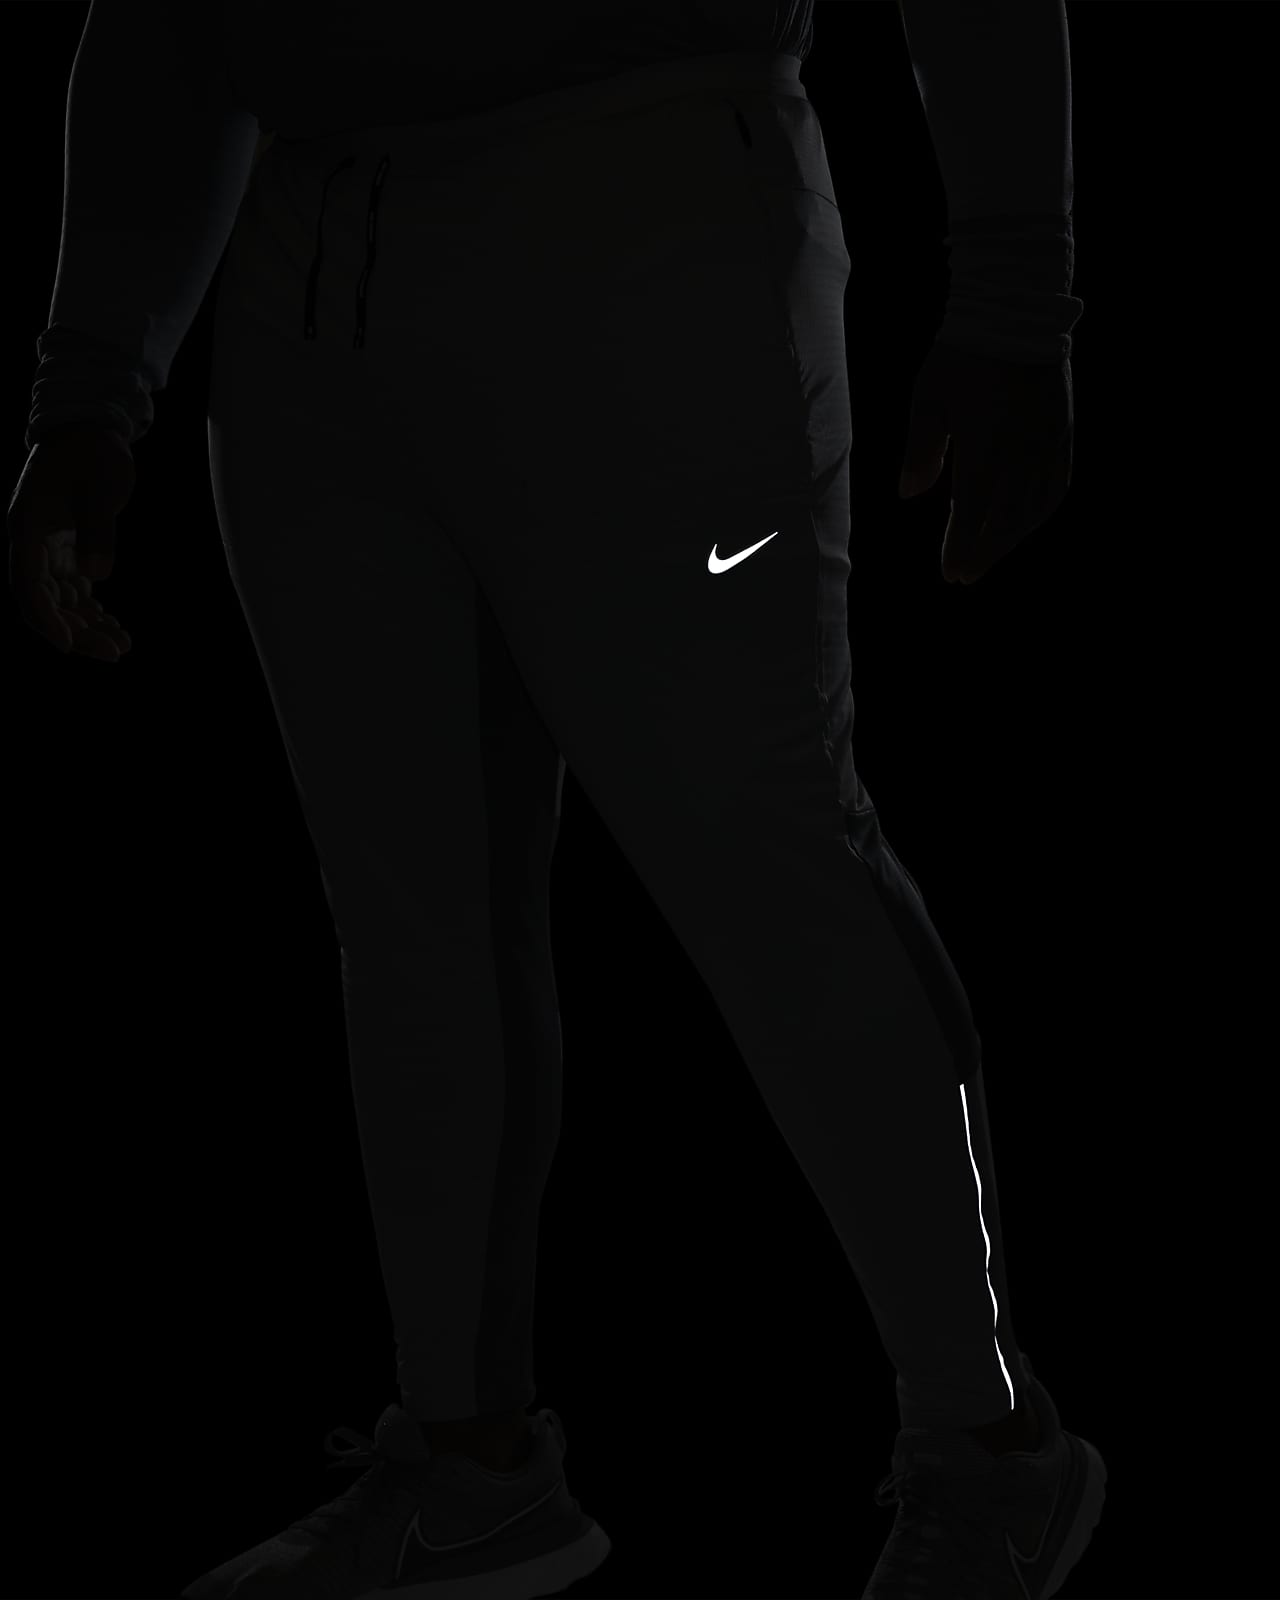 Nike Performance ELITE PANT - Tracksuit bottoms - smoke grey